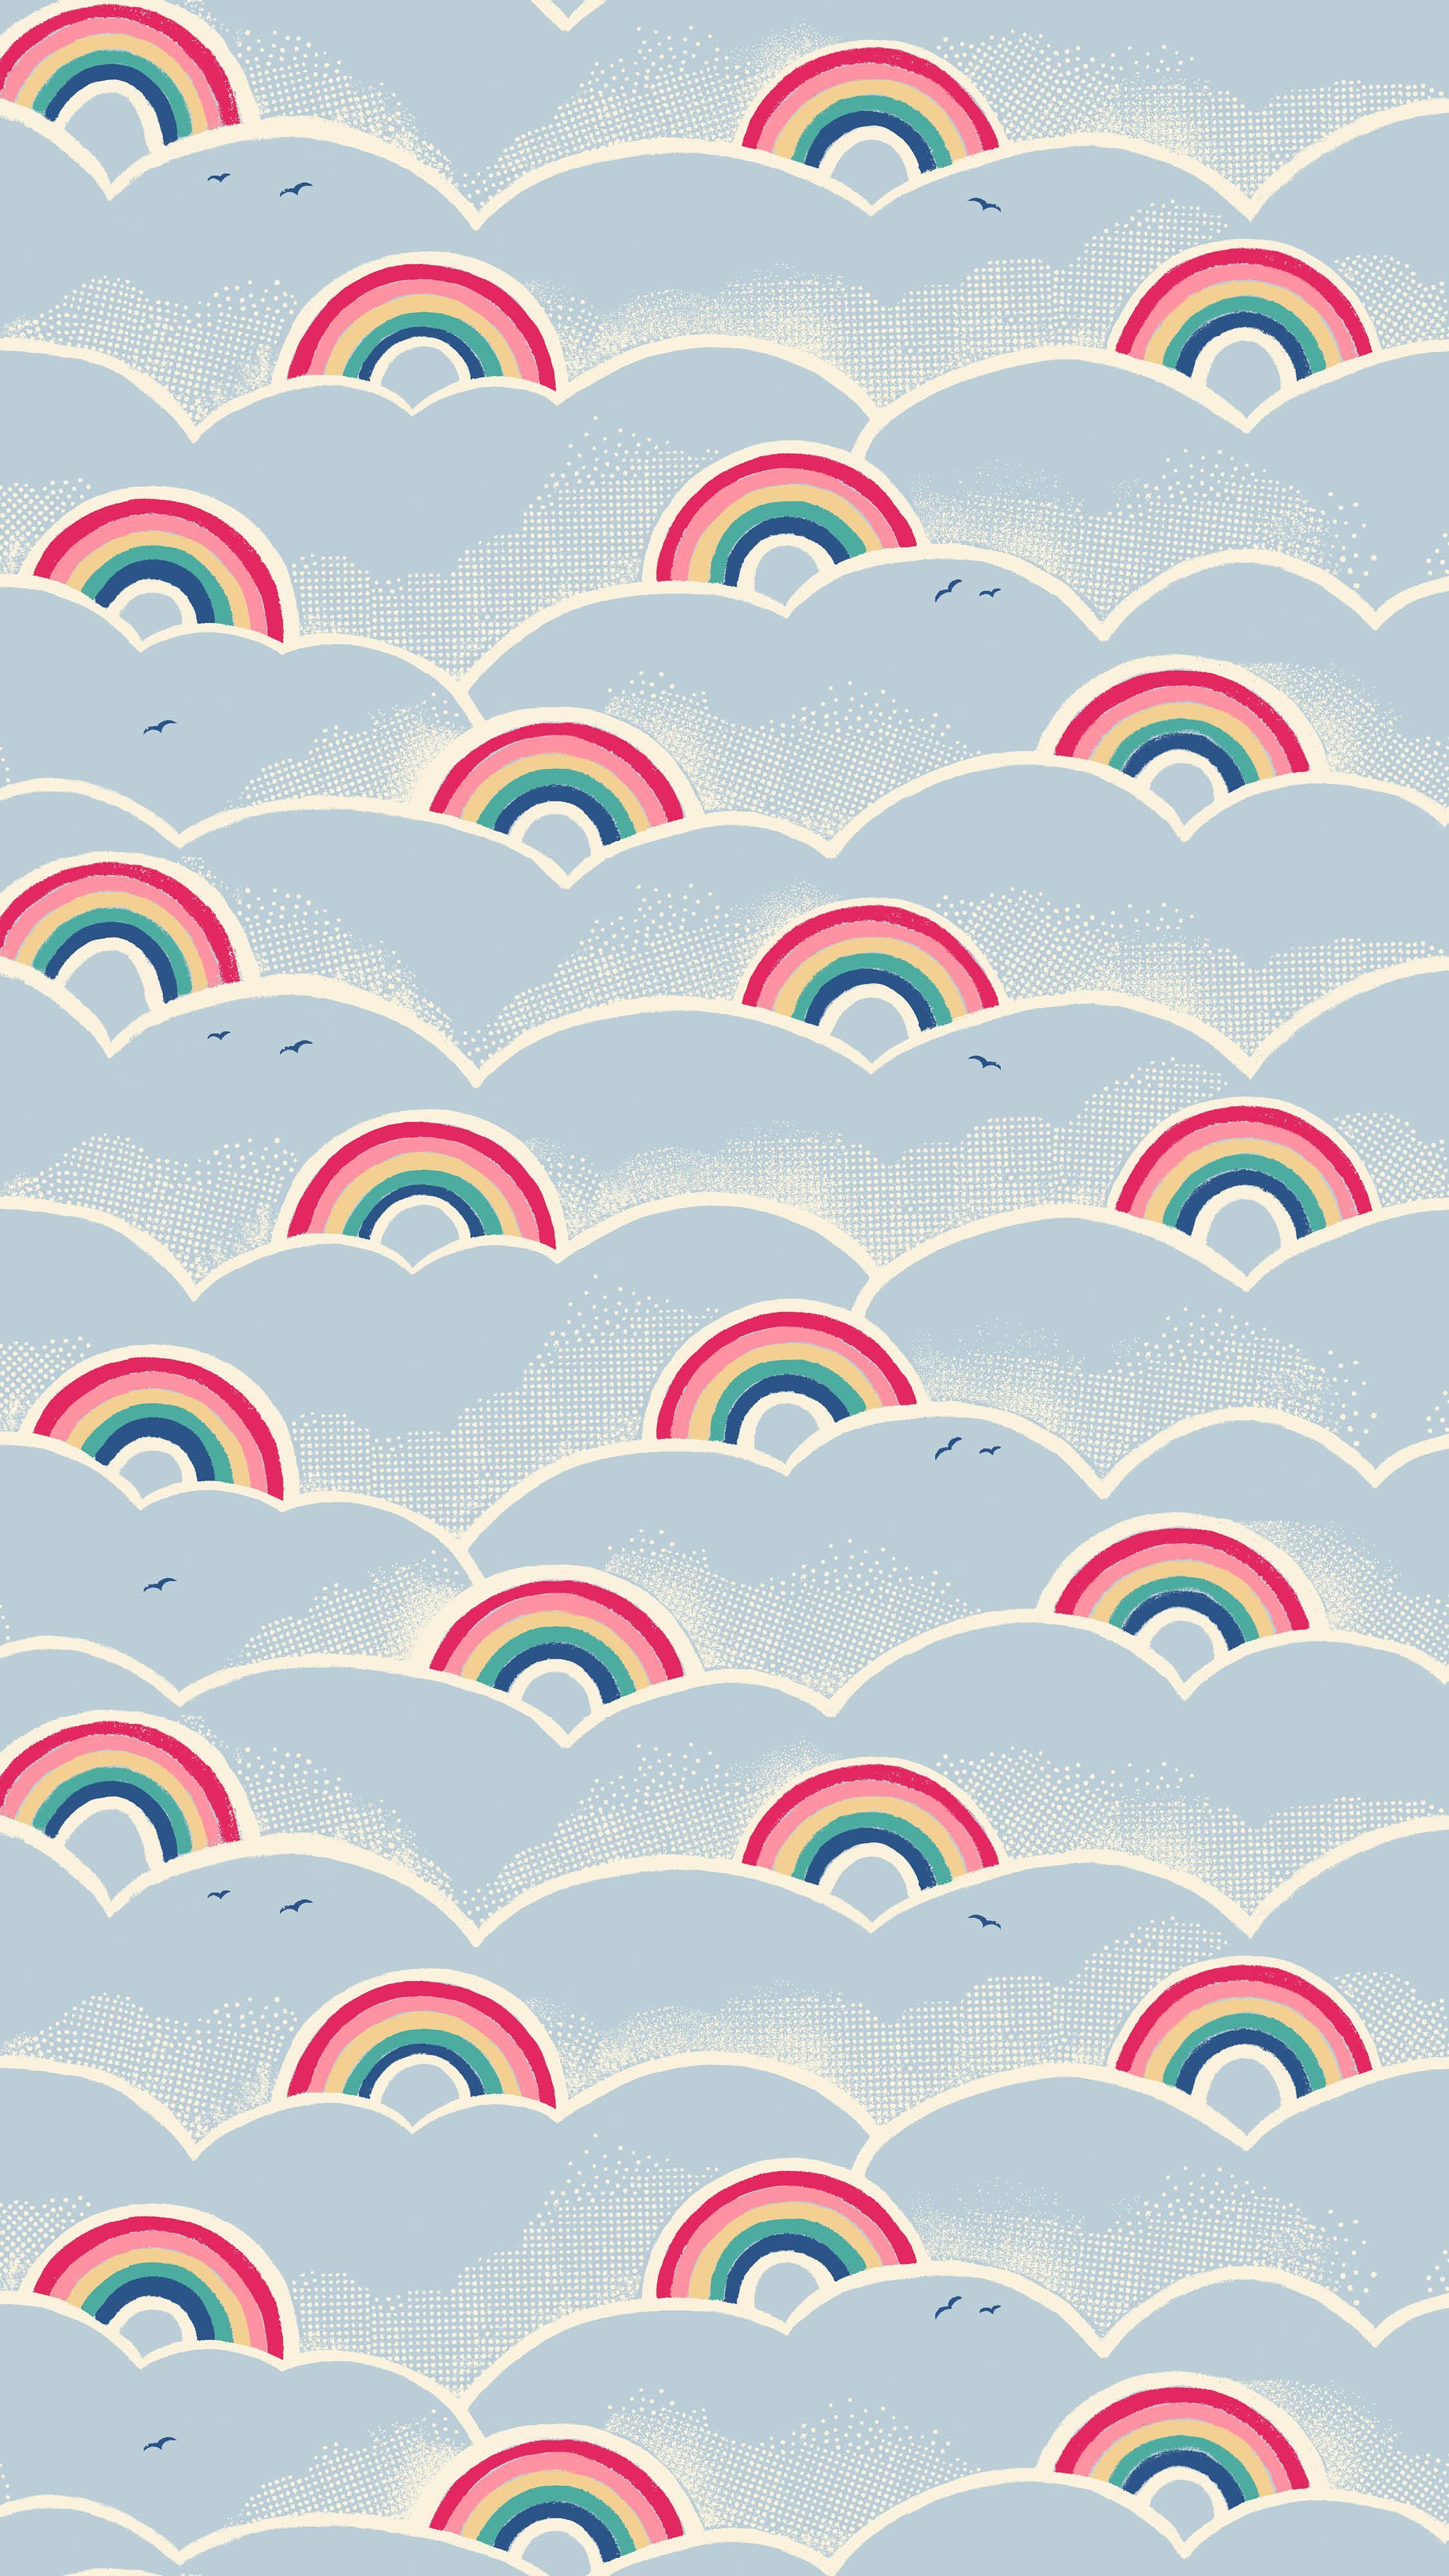 Rainbows. Rainbow wallpaper iphone, iPhone wallpaper landscape, Rainbow wallpaper